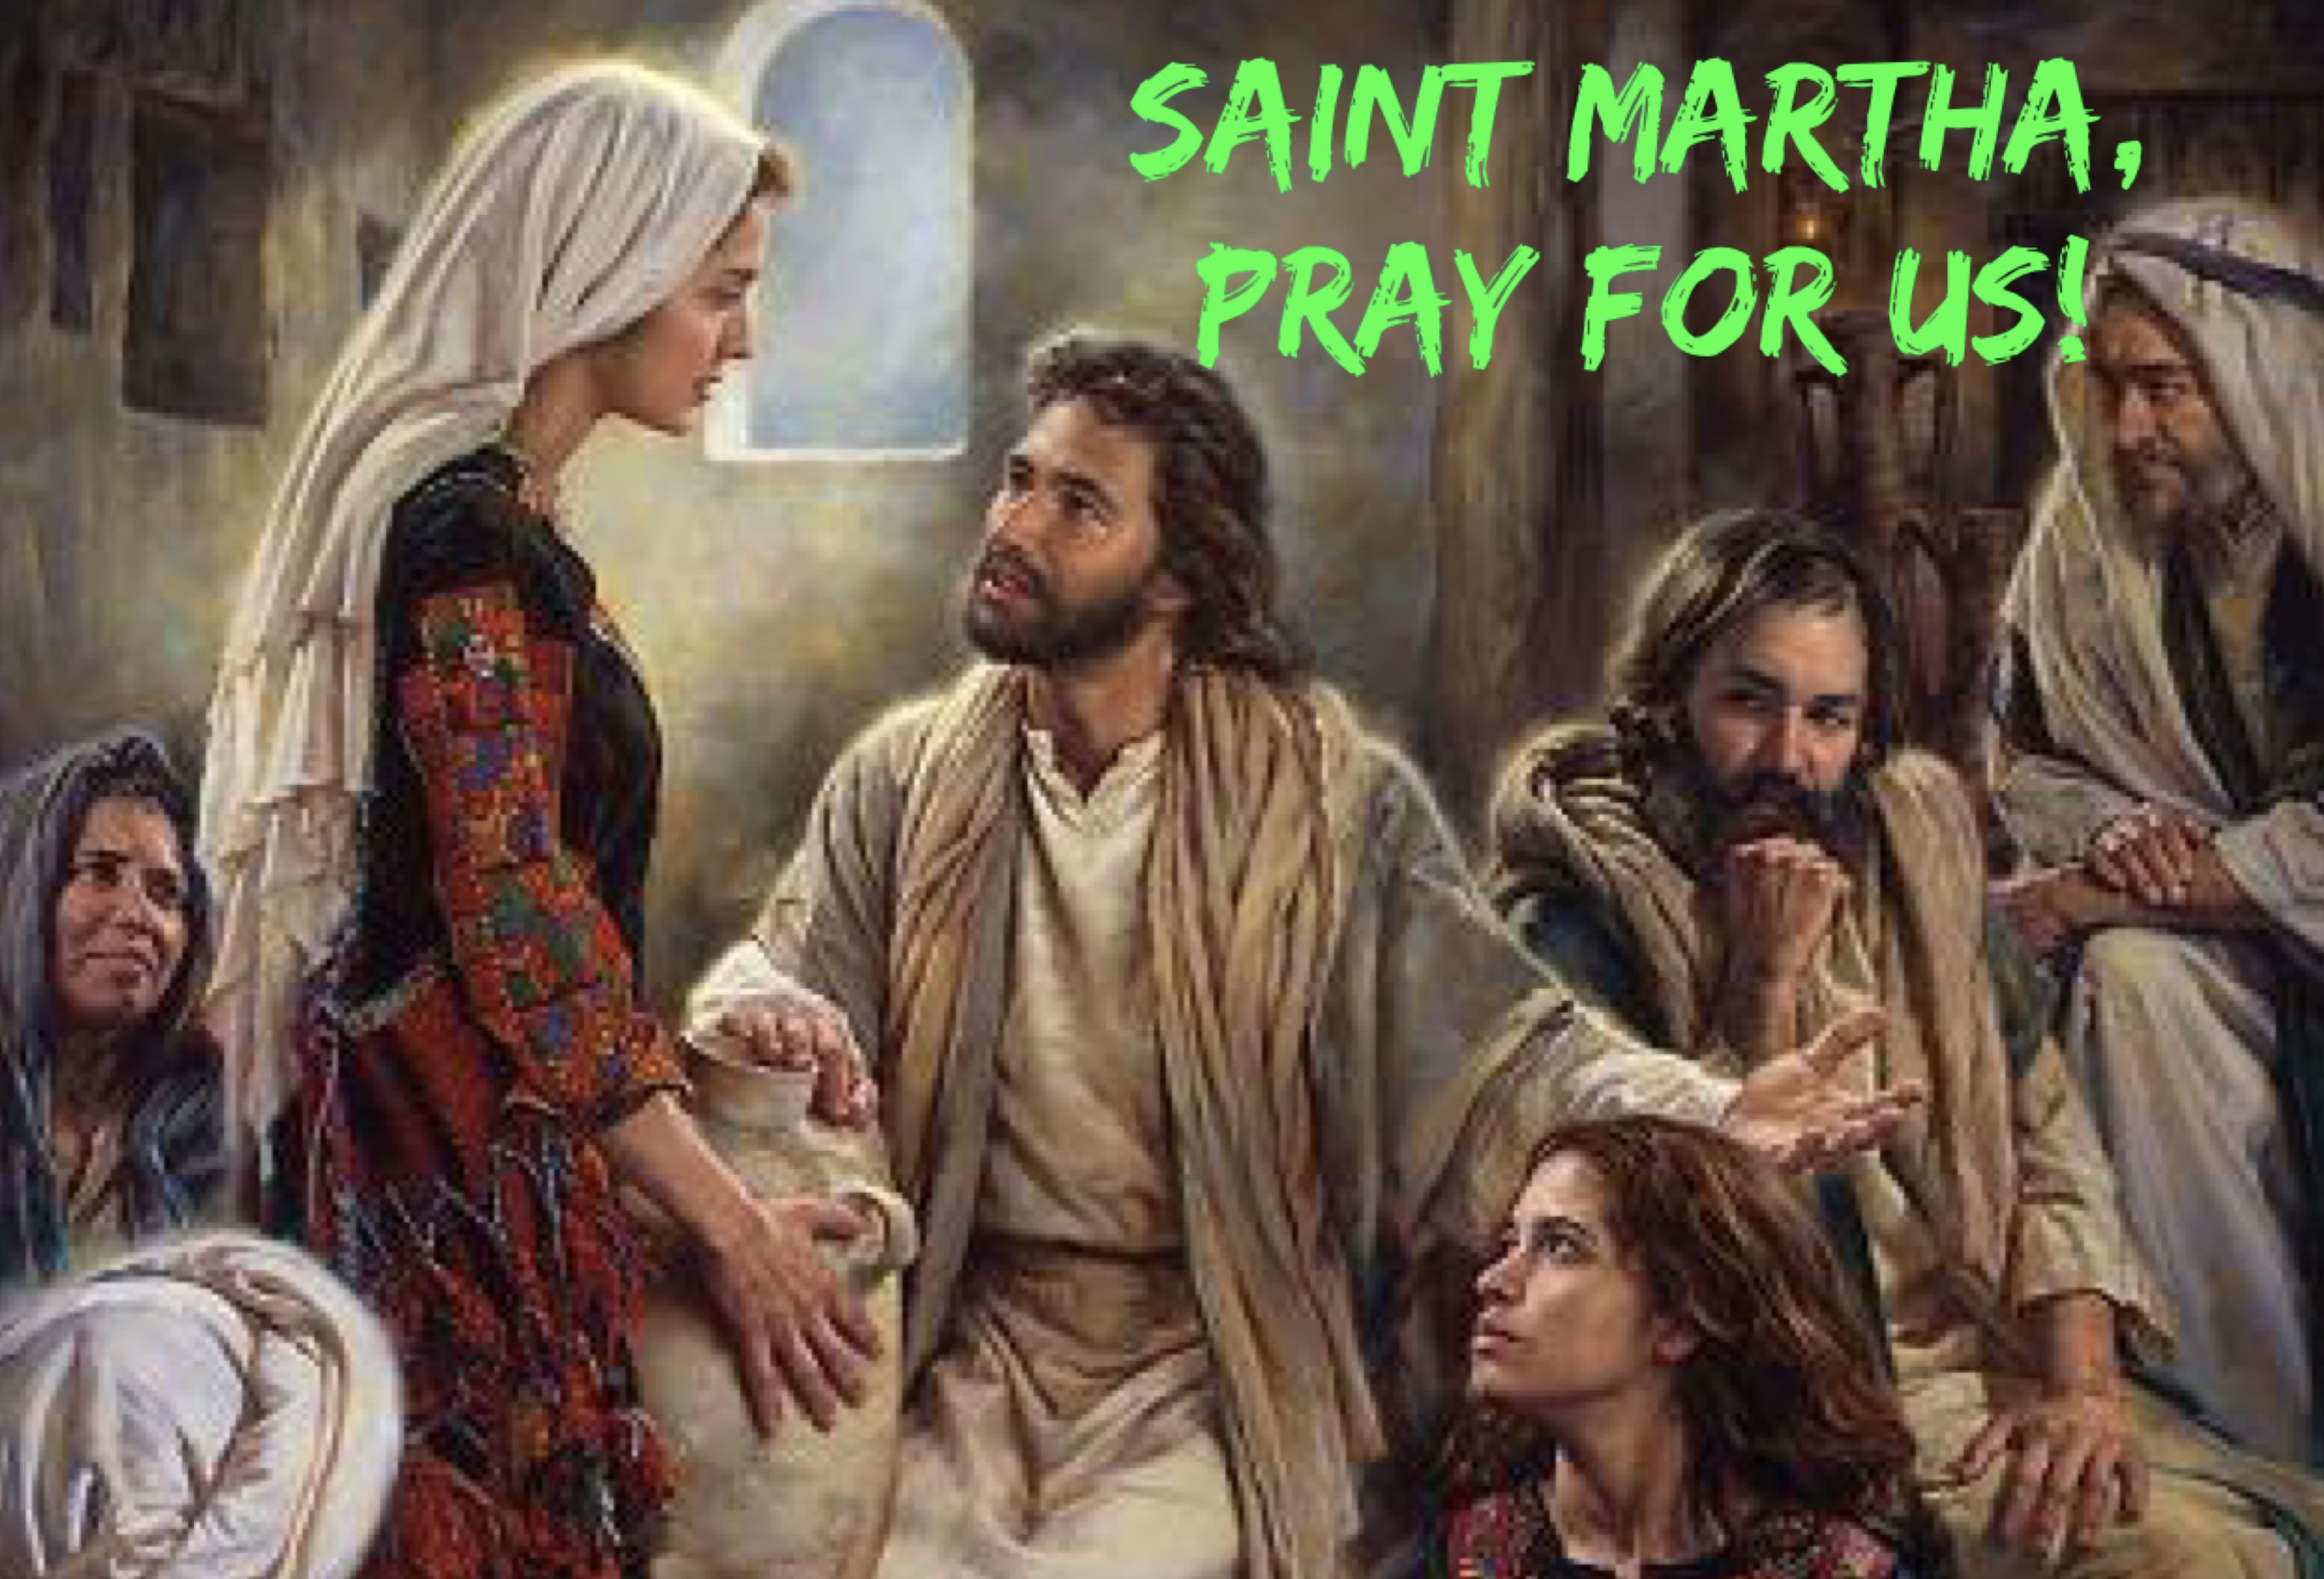 29th July - Saint Martha